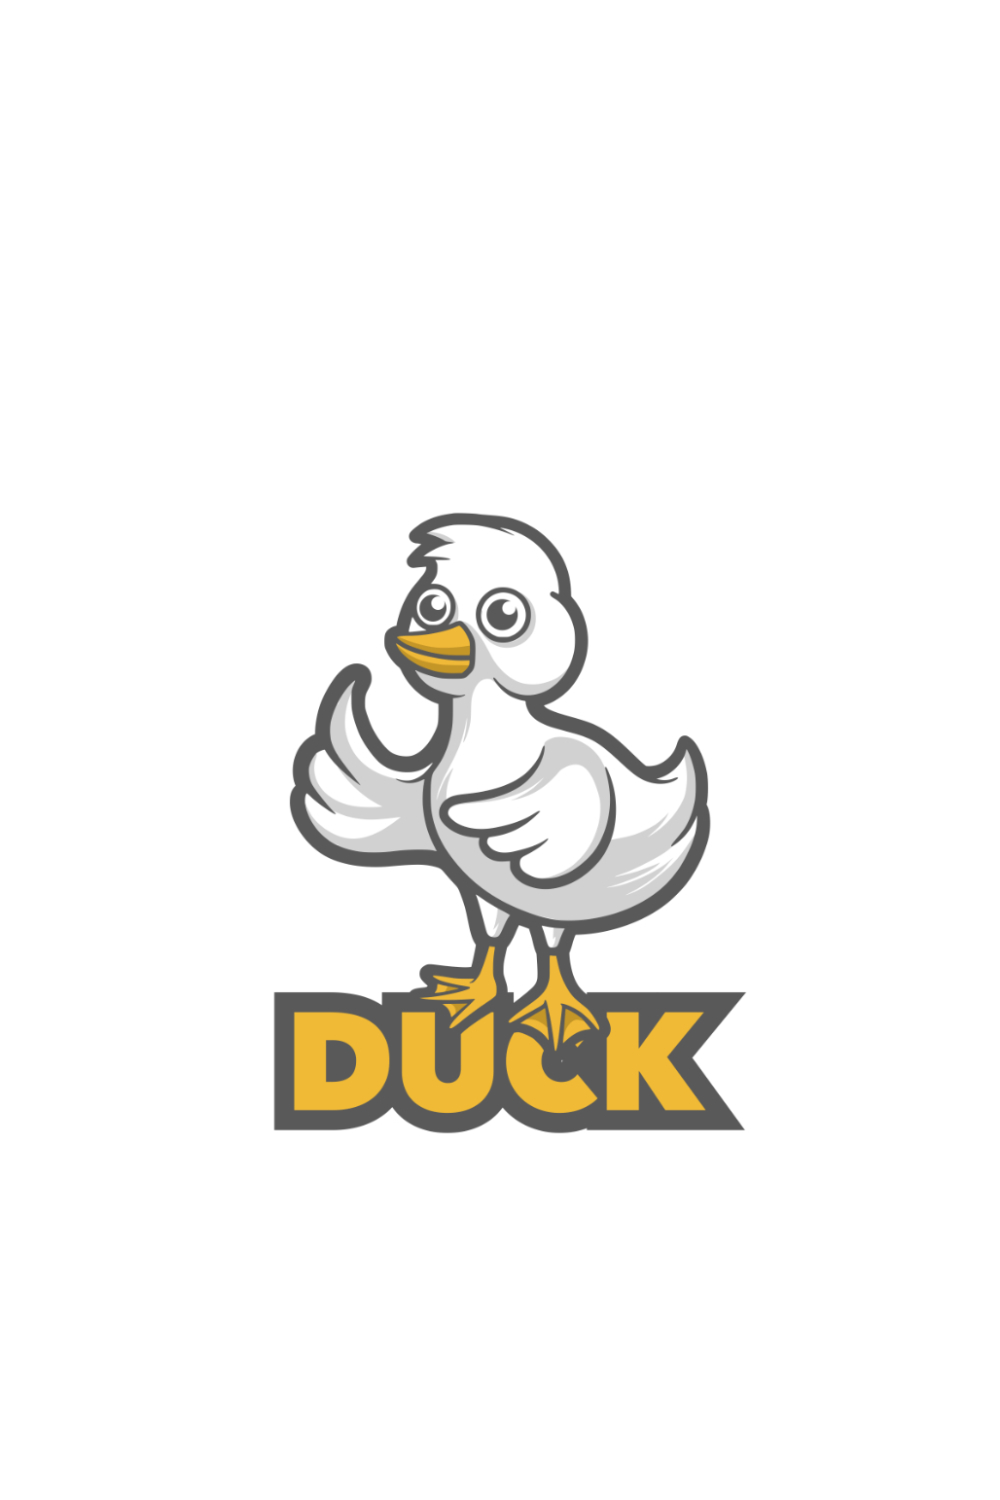 Duck mascot logo template pinterest preview image.